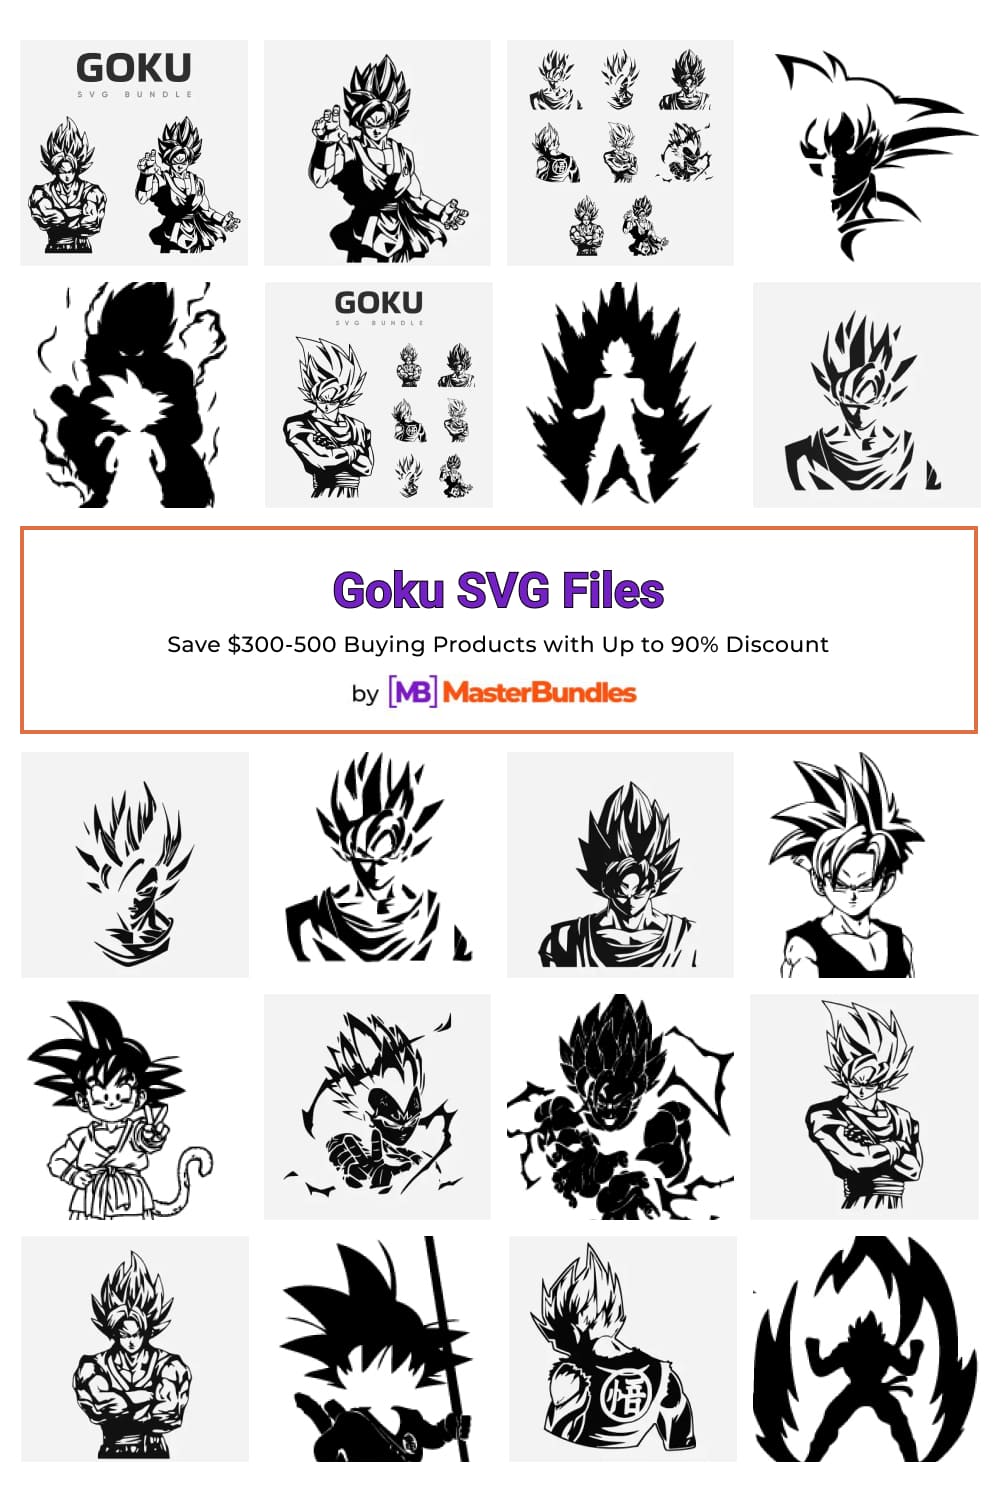 Goku SVG Files for pinterest.